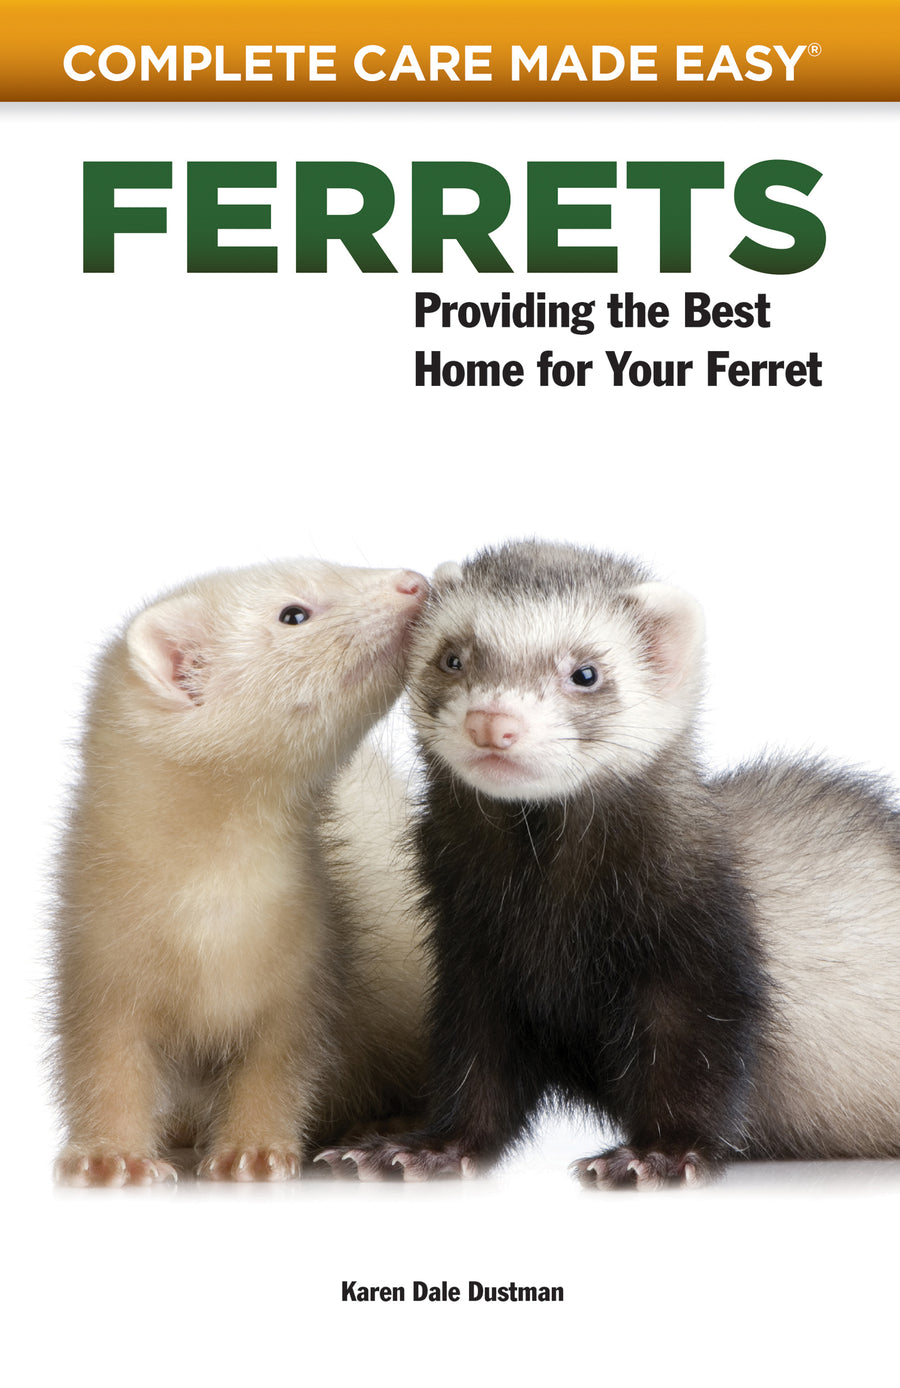 Ferrets Paperback Publication: 2002/03/01